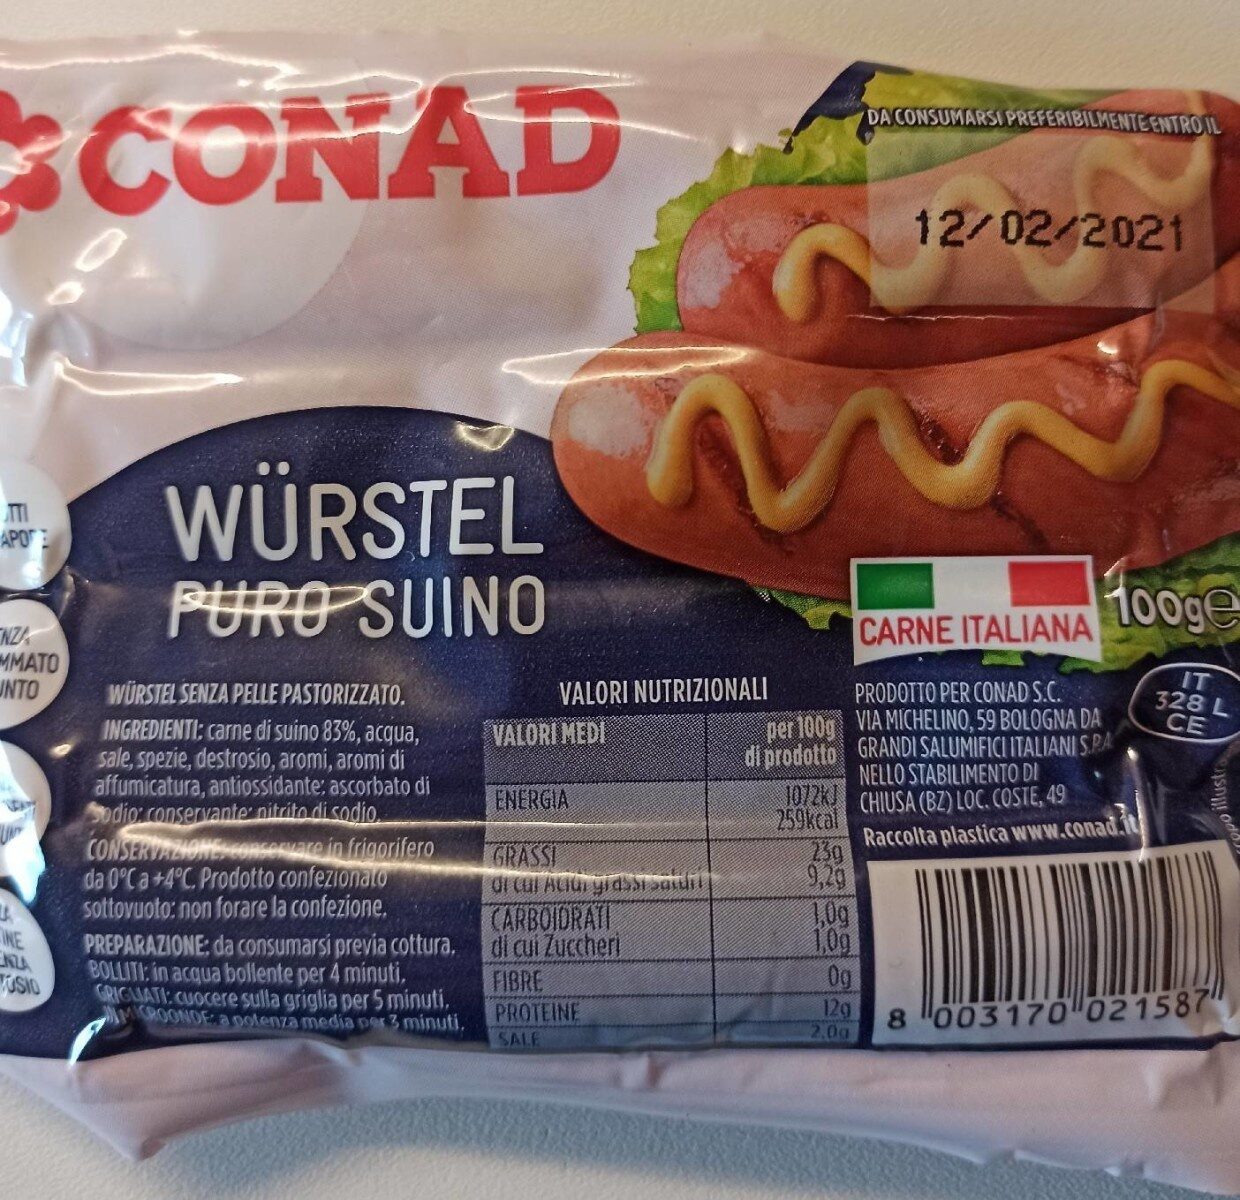 Wurstel - Product - it